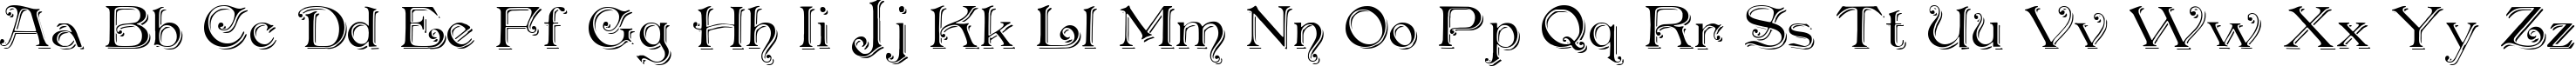 Пример написания английского алфавита шрифтом Antikvar Shadow Roman